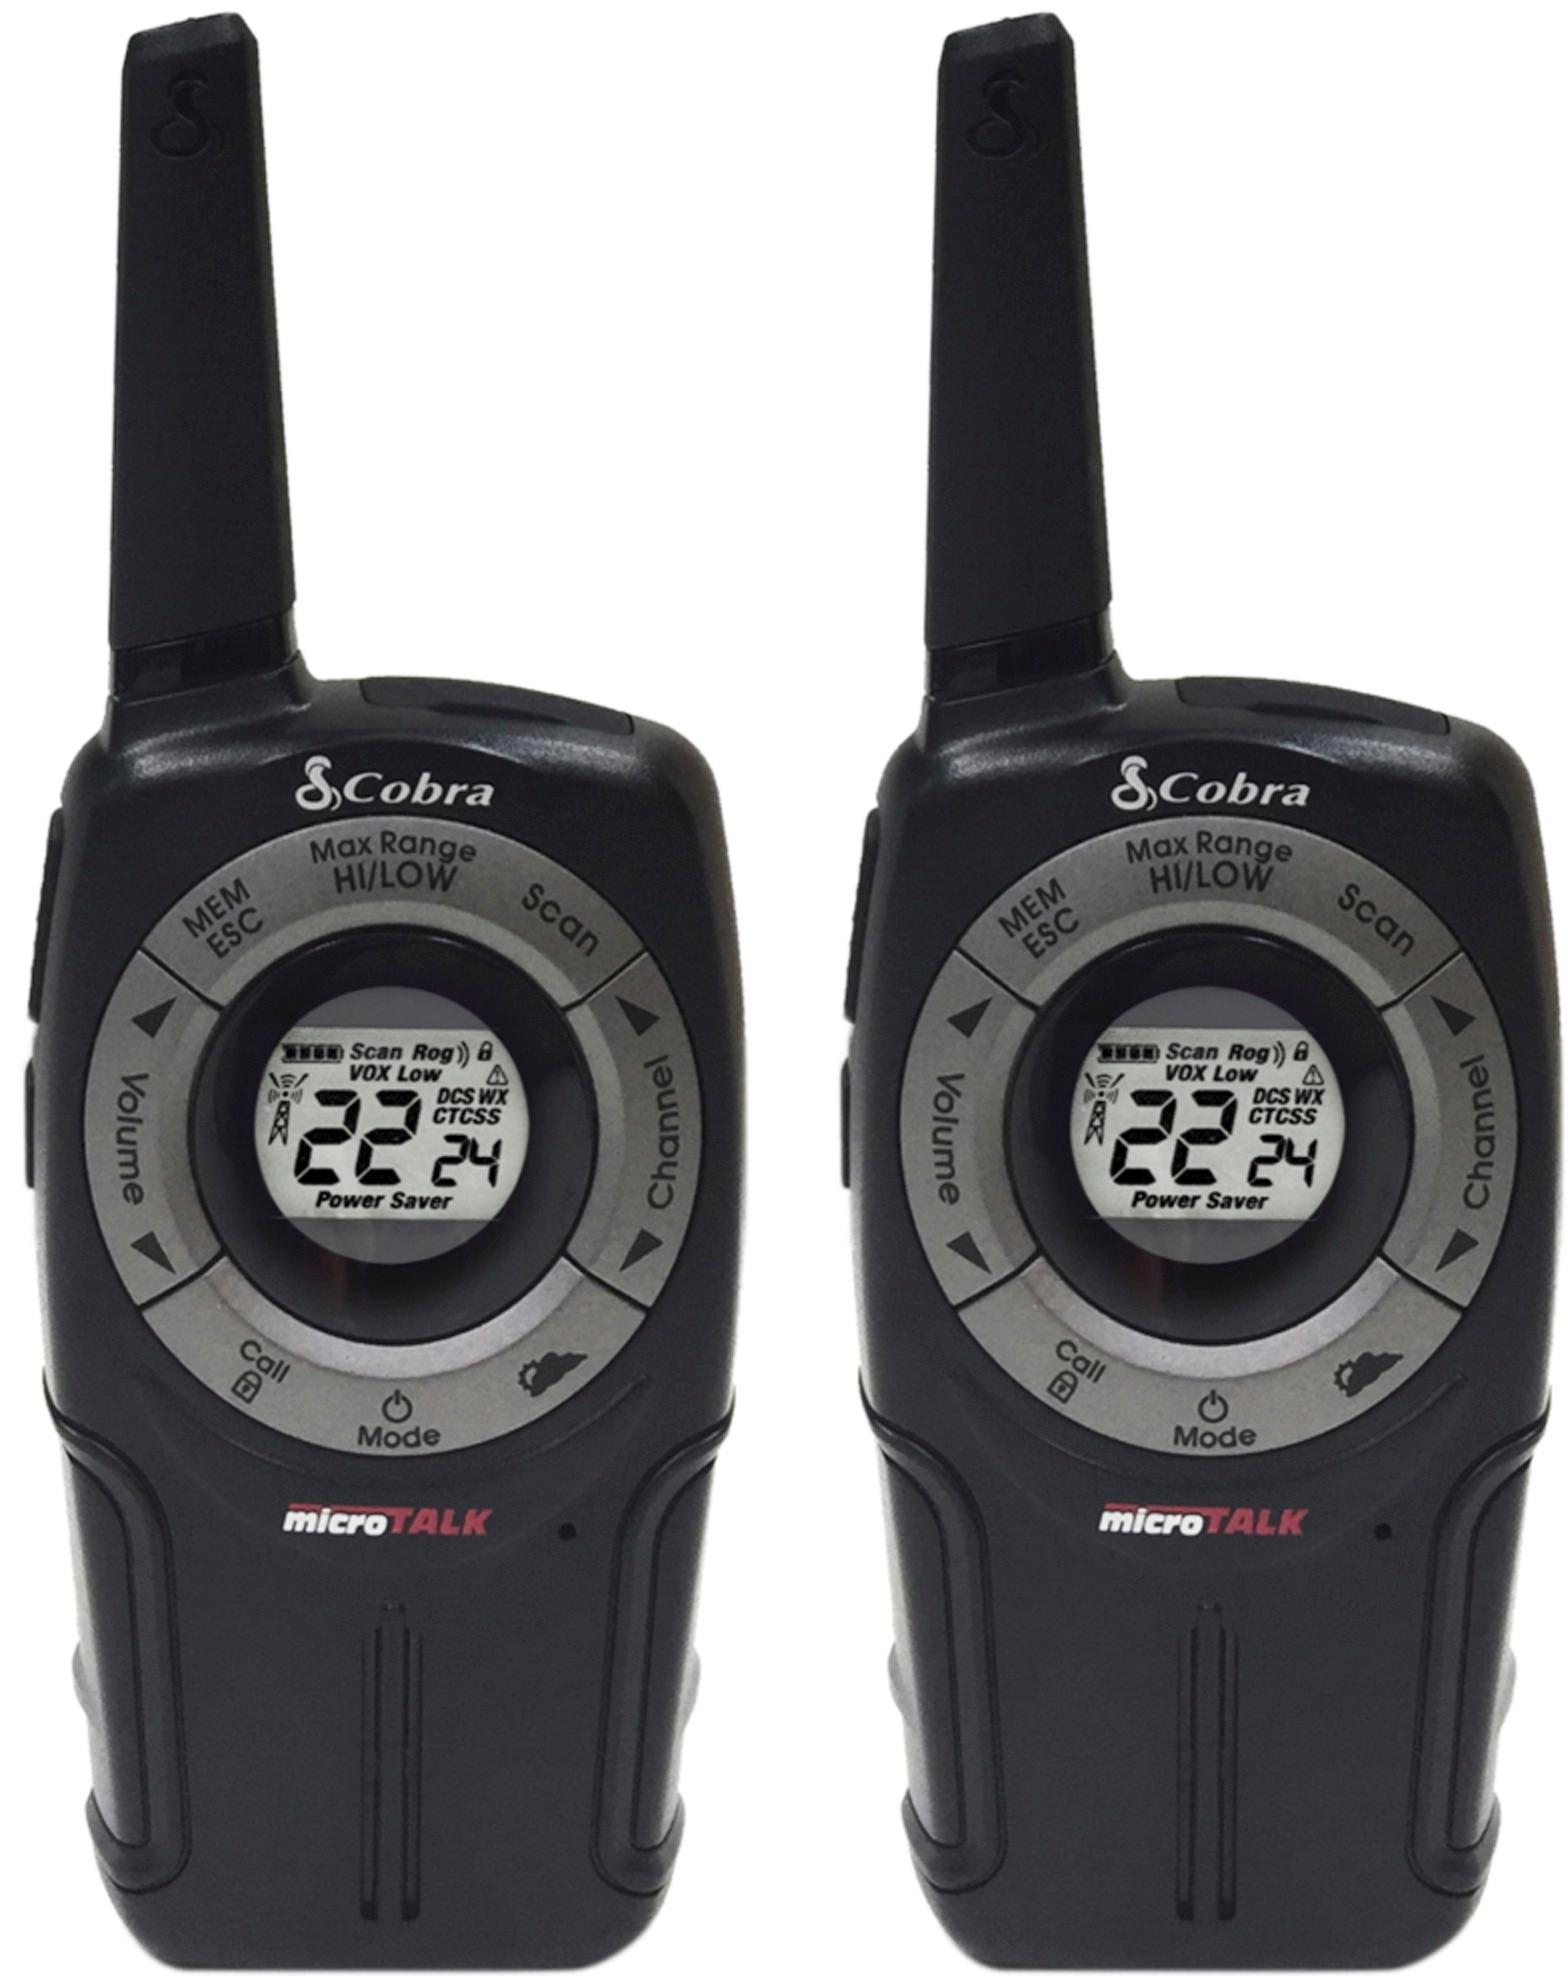 Angle View: Cobra - PRO series 28-Mile FRS 2-Way Radios (Pair) - Black